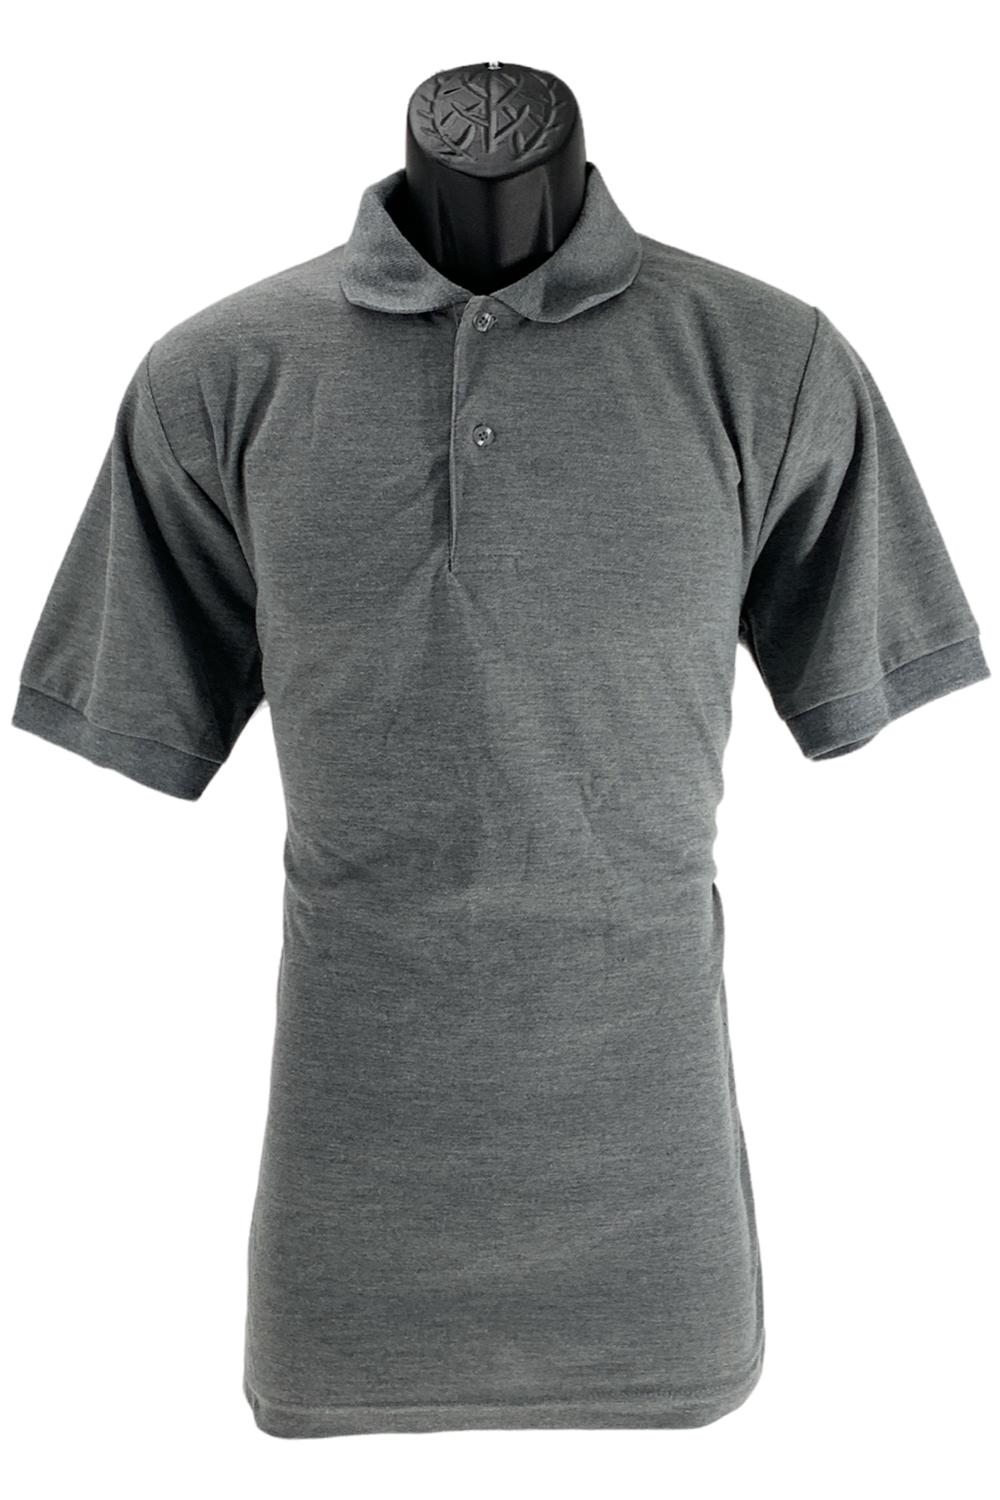 Galaxy by Harvic Men's Short Sleeve Polo Shirt